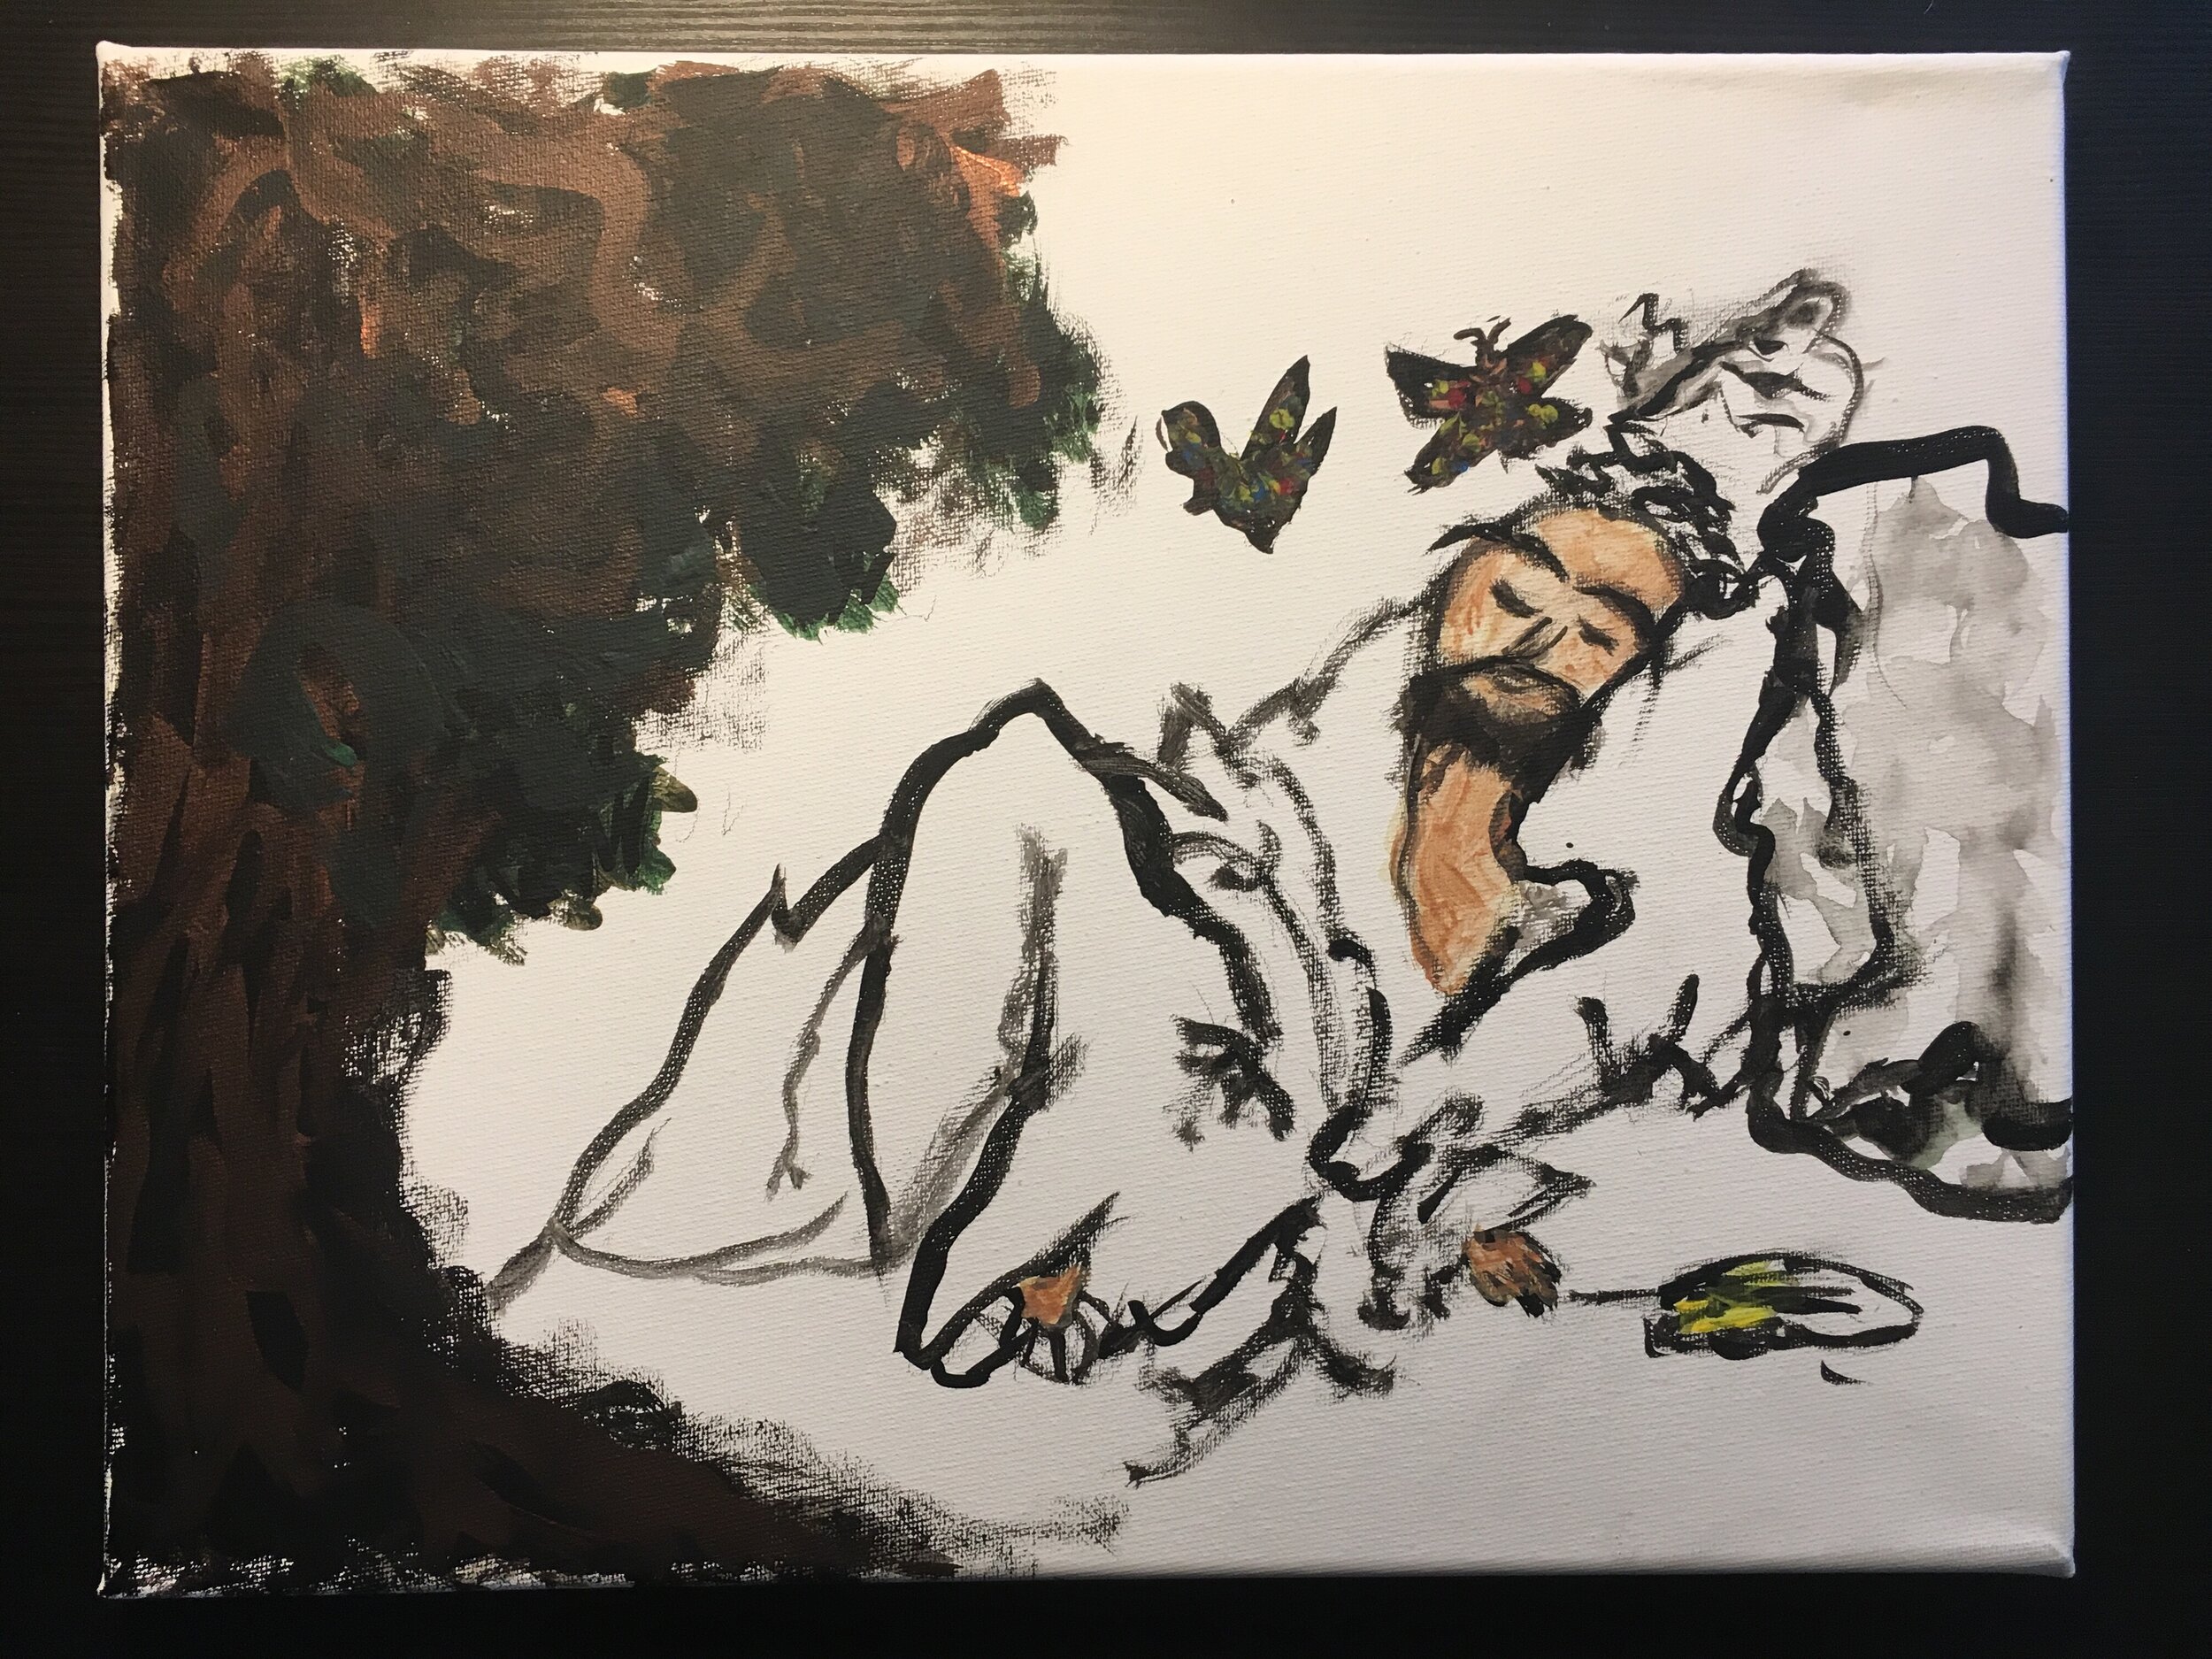 Hoon Cheon, Creative Assignment # 2, The Zhuangzi: A Daoist Classic, Fall 2018